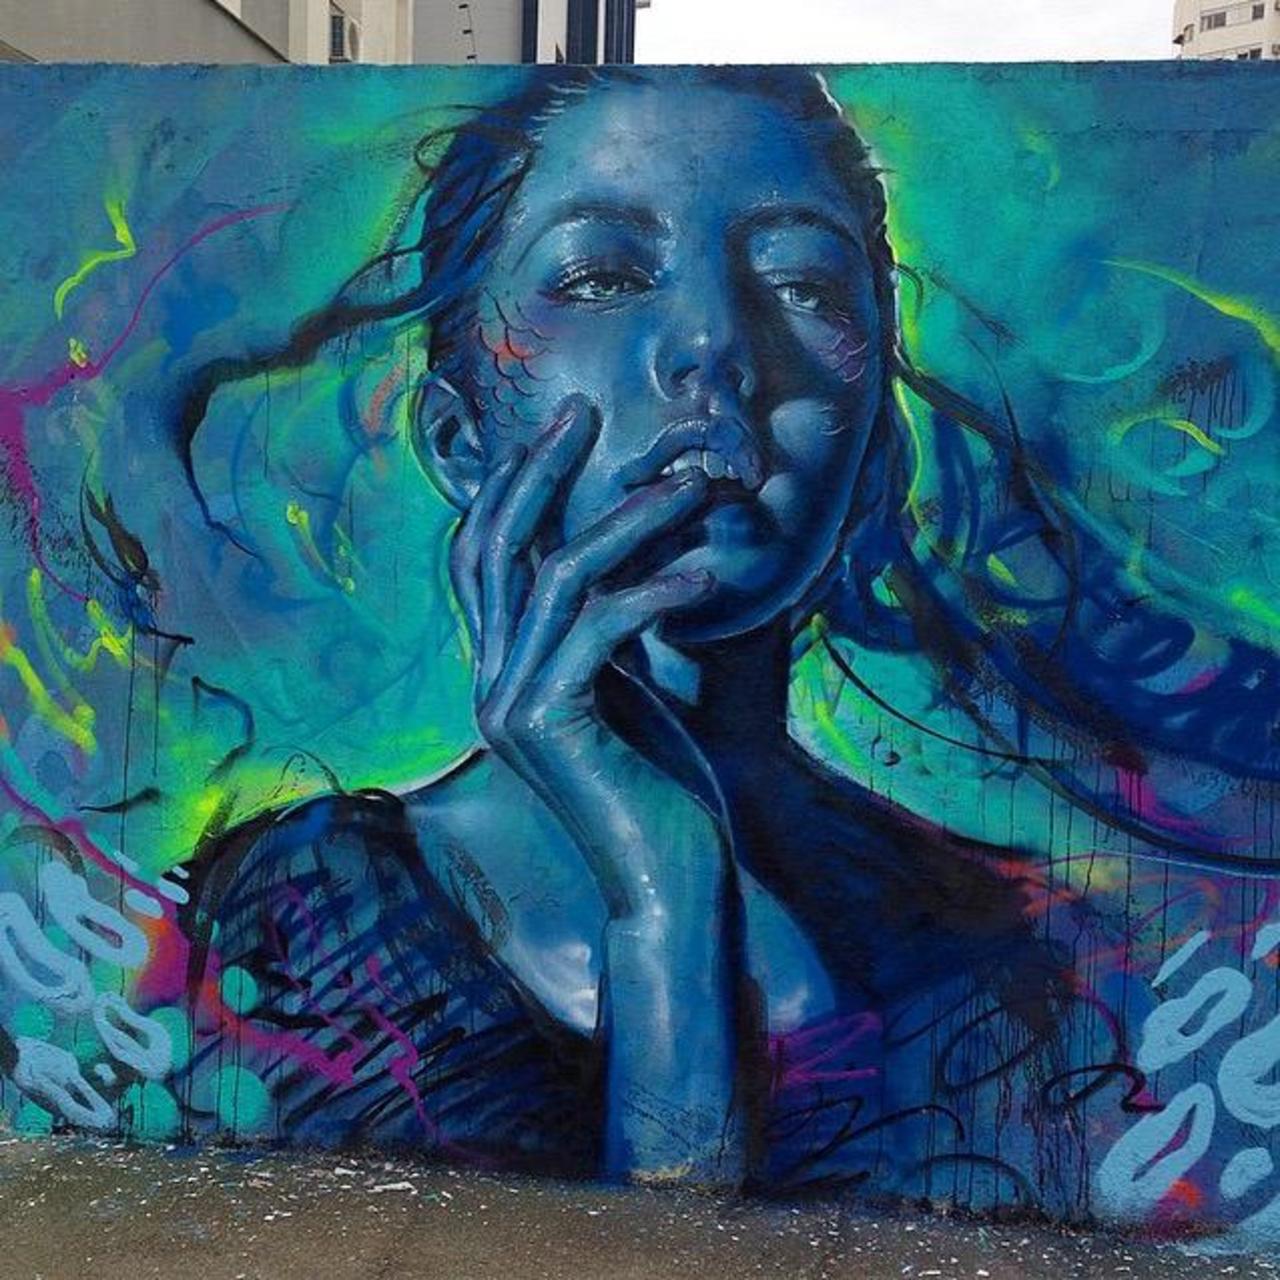 Thiago Valdi new Street Art piece titled 'Day Dreamer'

#art #mural #graffiti #streetart http://t.co/pWgf0SUzeD